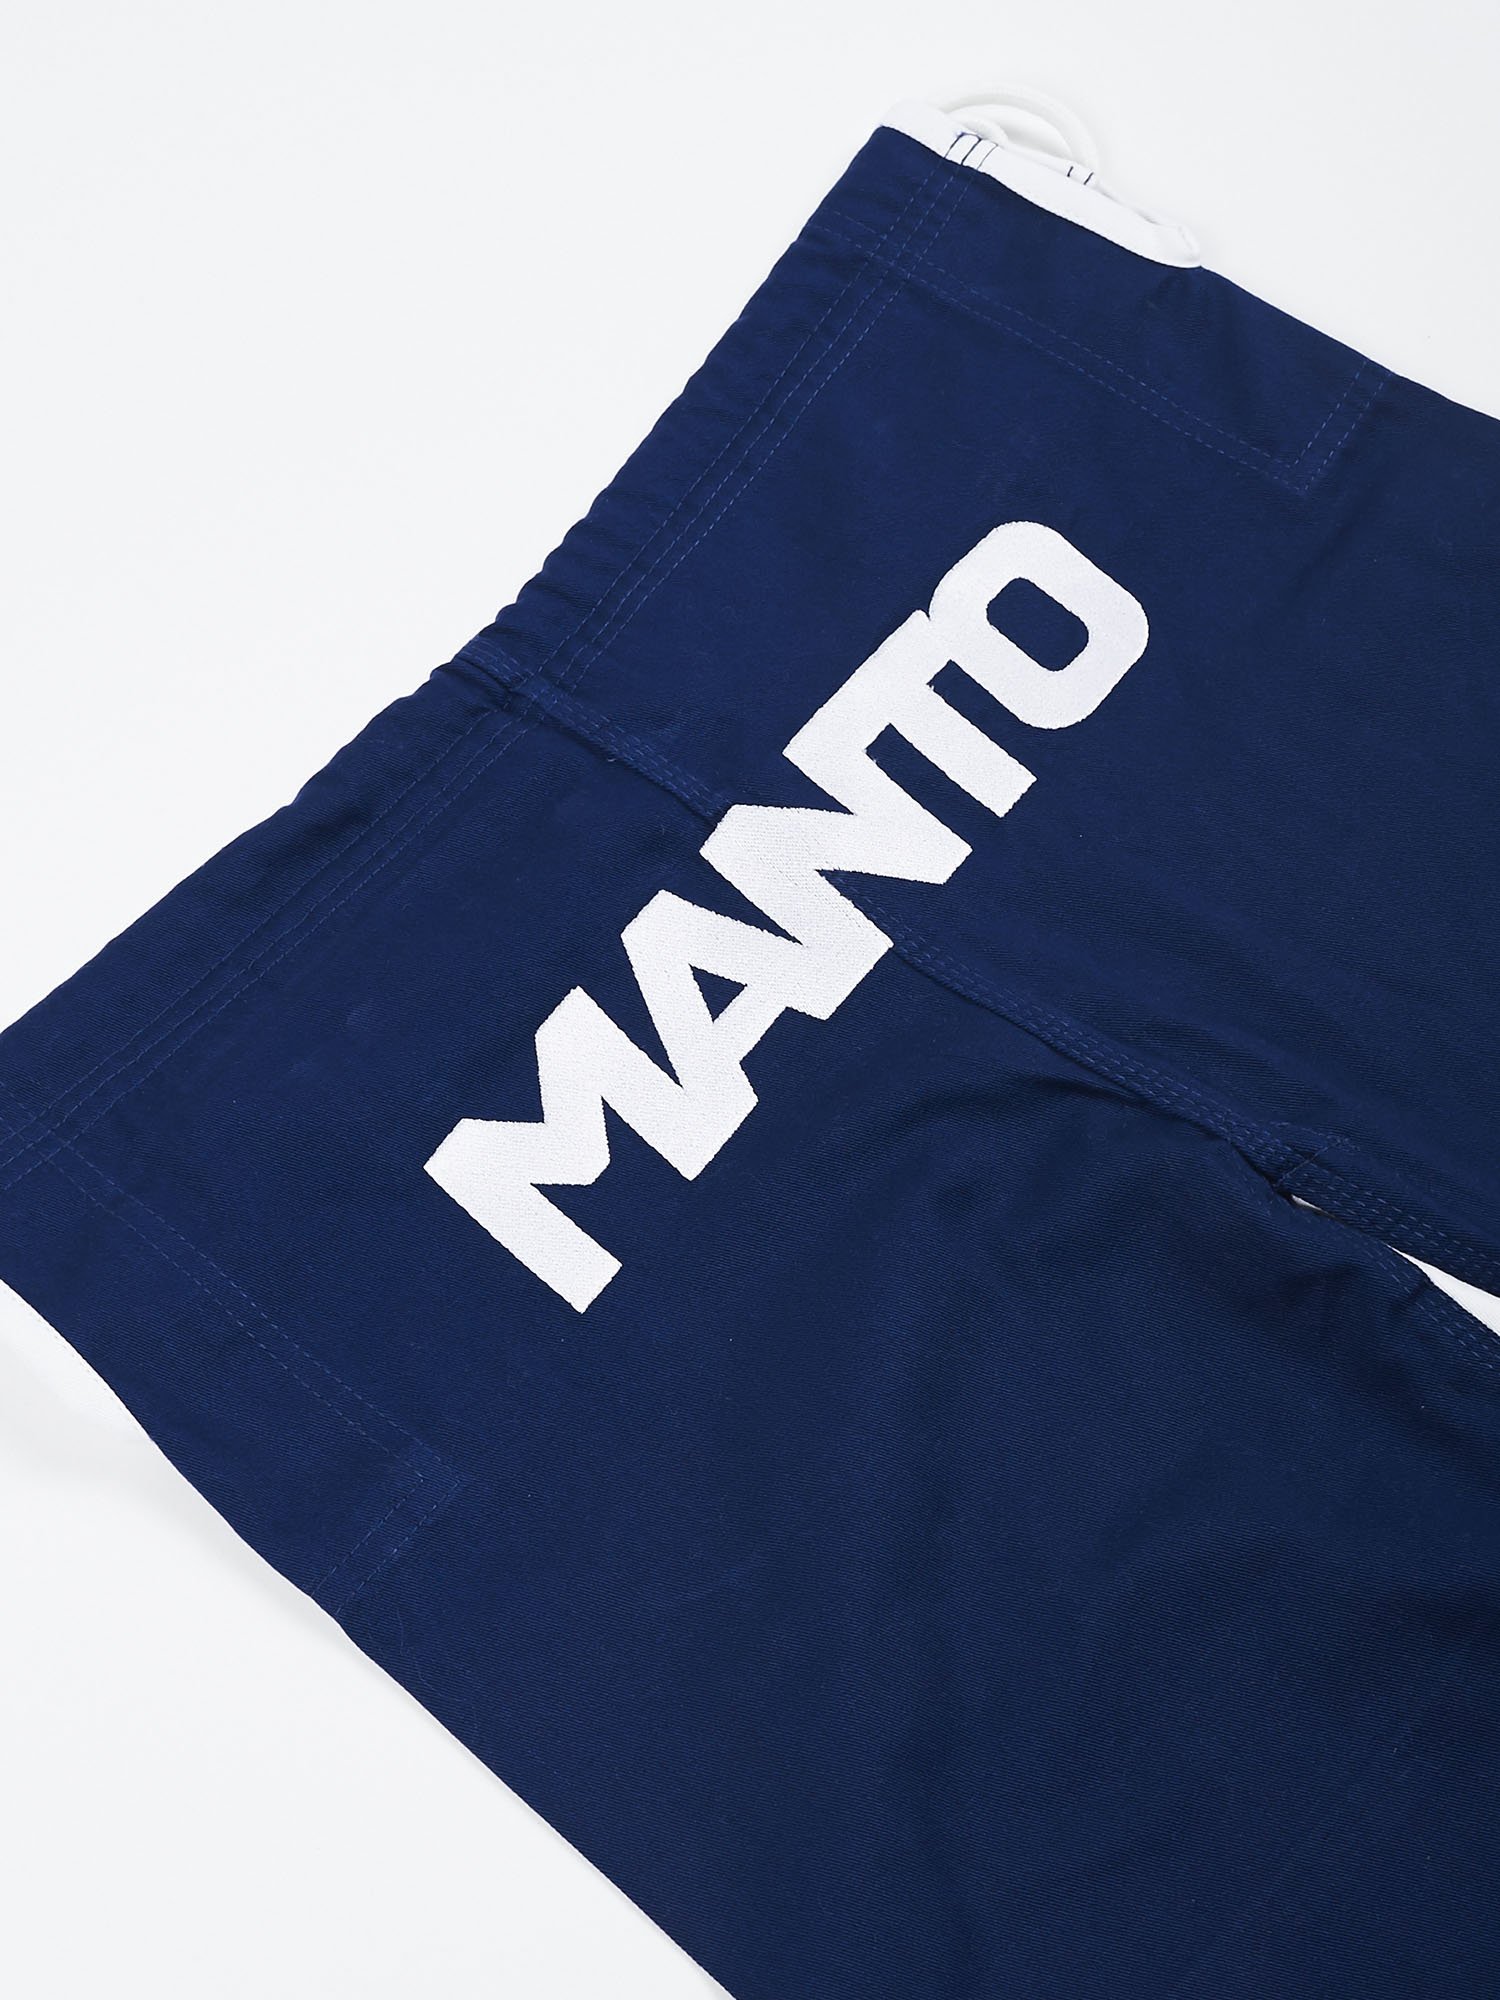 MANTO X4 BJJ GI navy blue